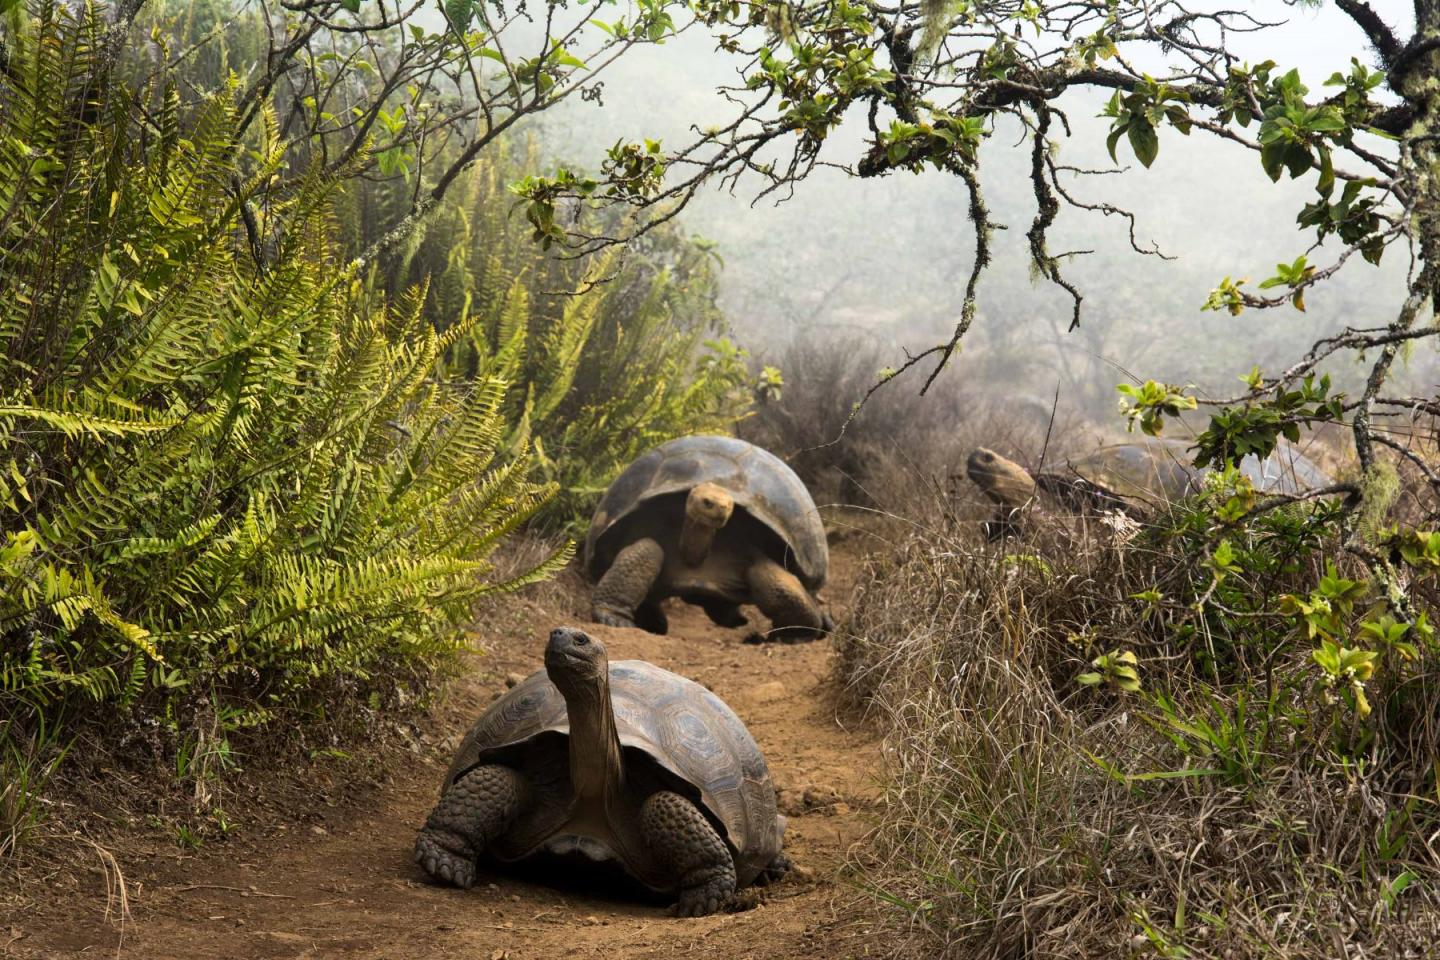 Turtois in Galapagos Islands